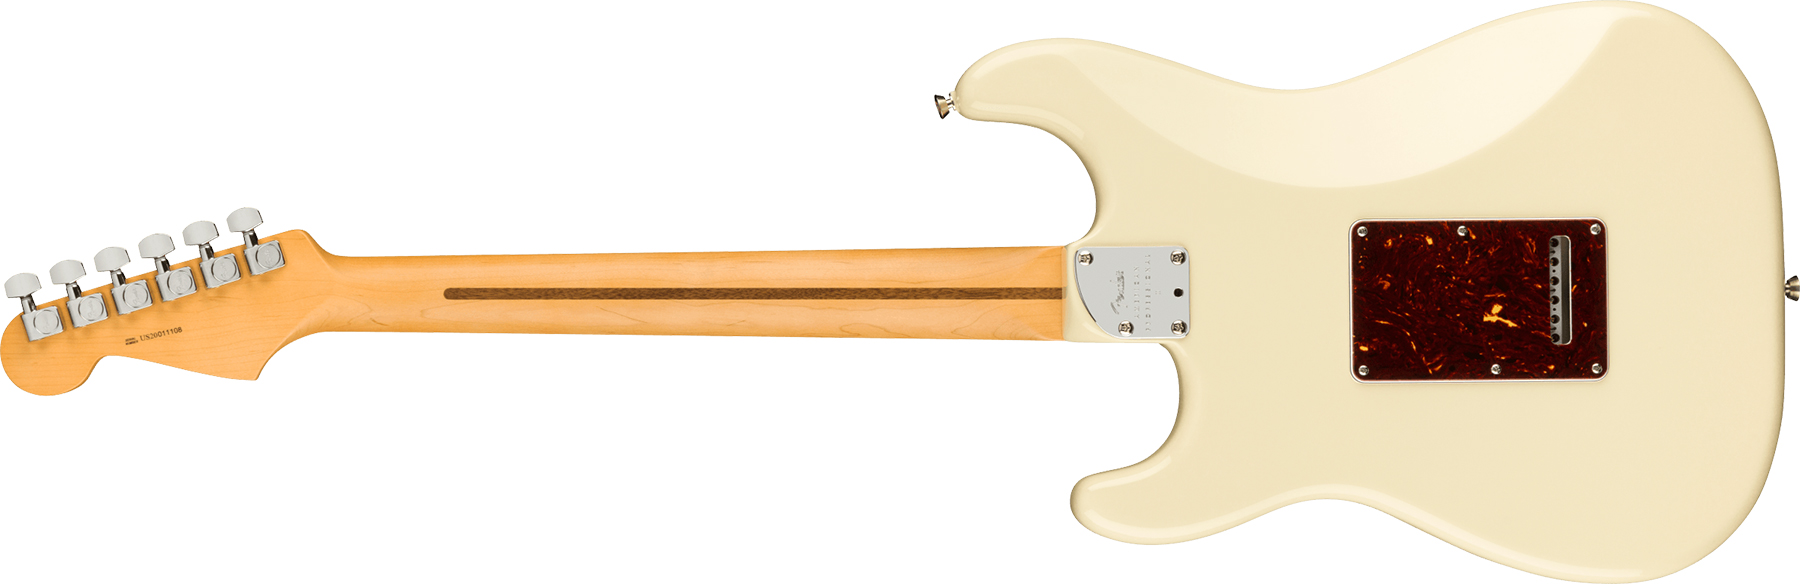 Fender Strat American Professional Ii Usa Rw - Olympic White - E-Gitarre in Str-Form - Variation 1